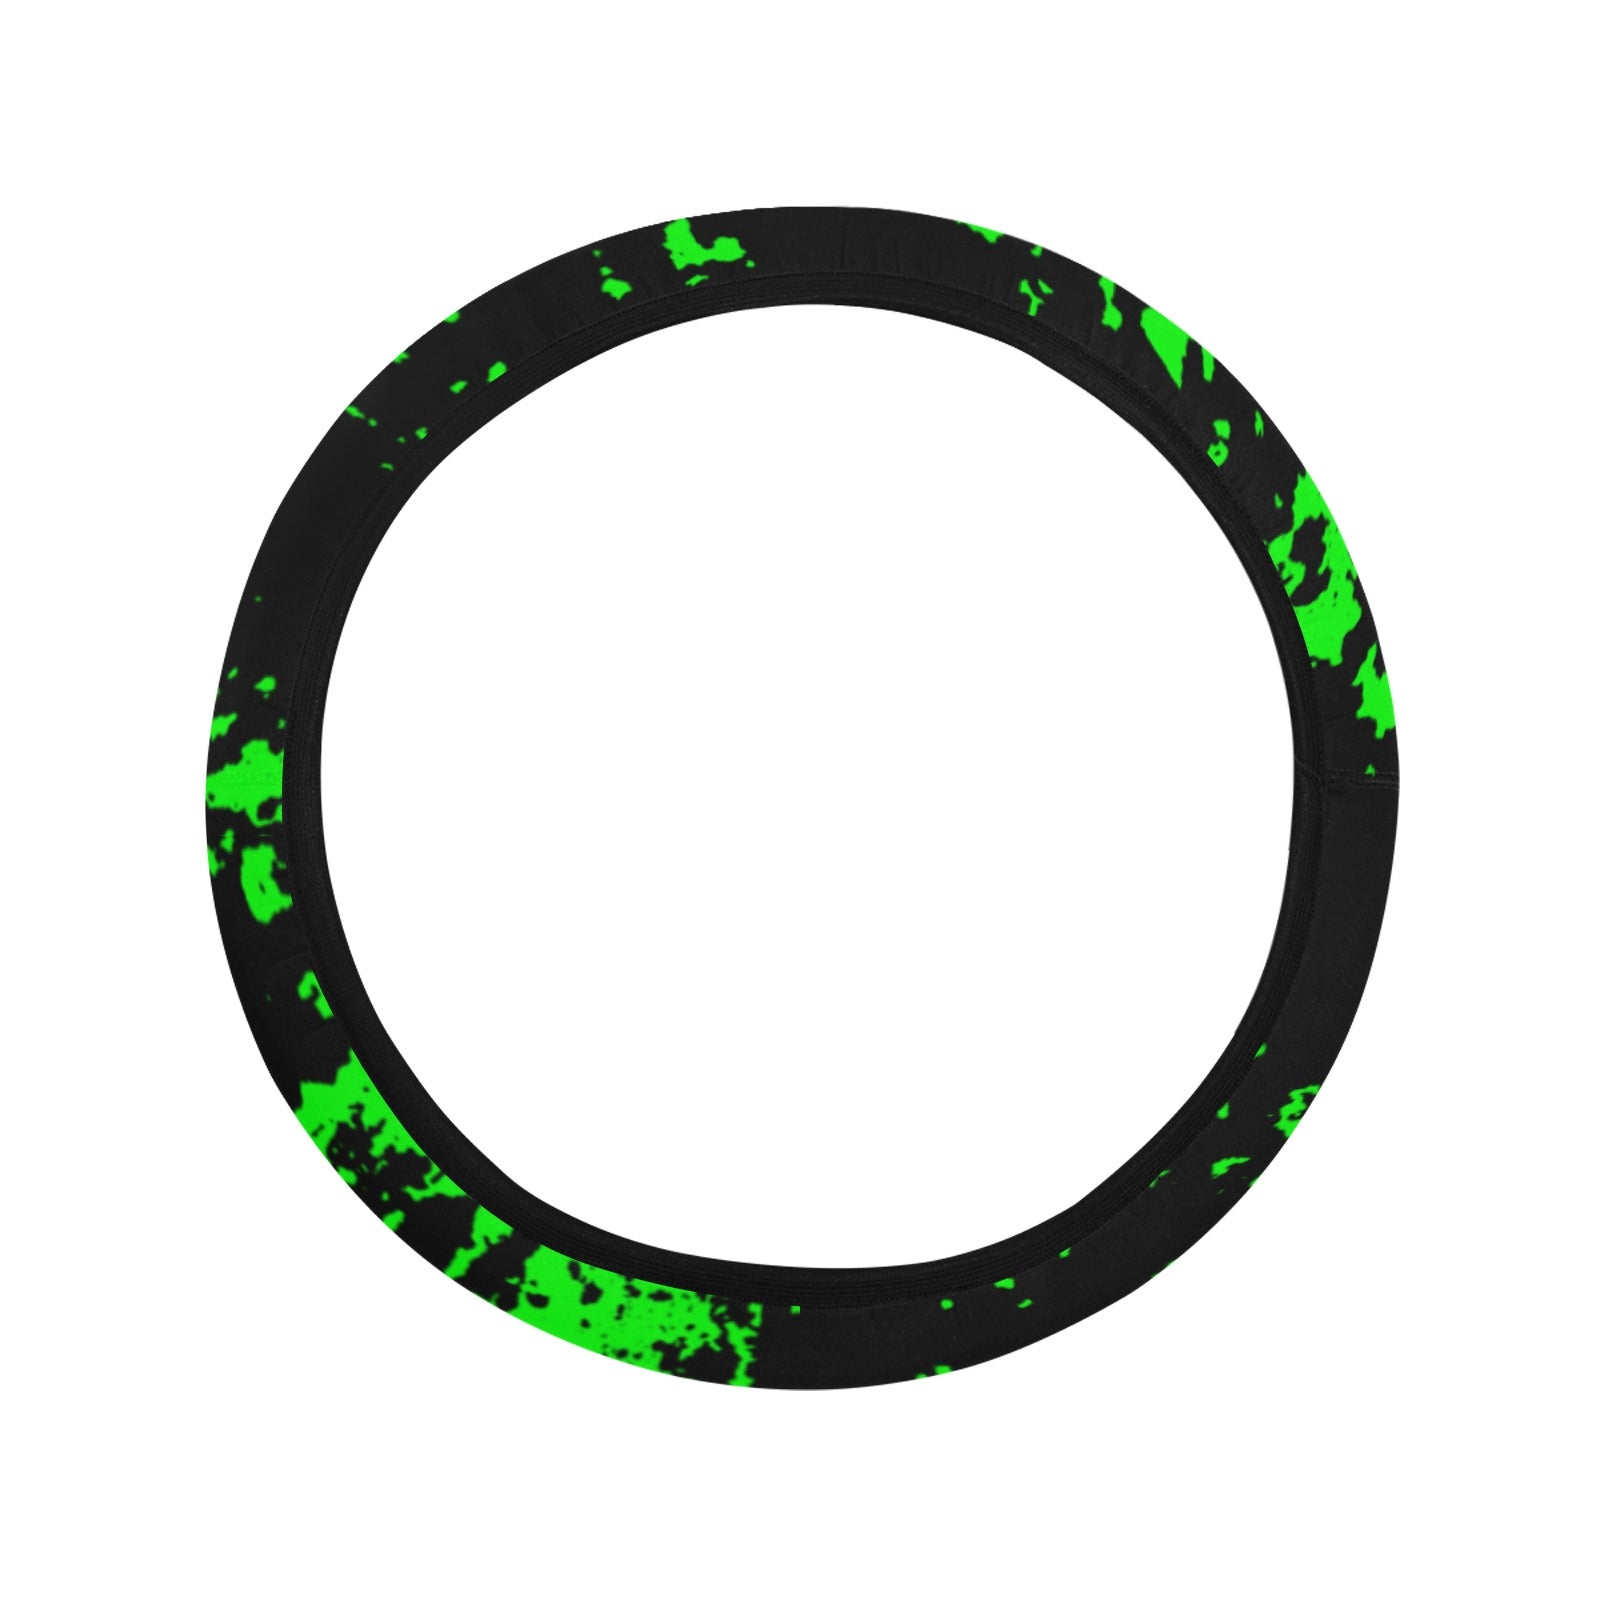 Neon Green Spray Steering Wheel Cover with Elastic Edge